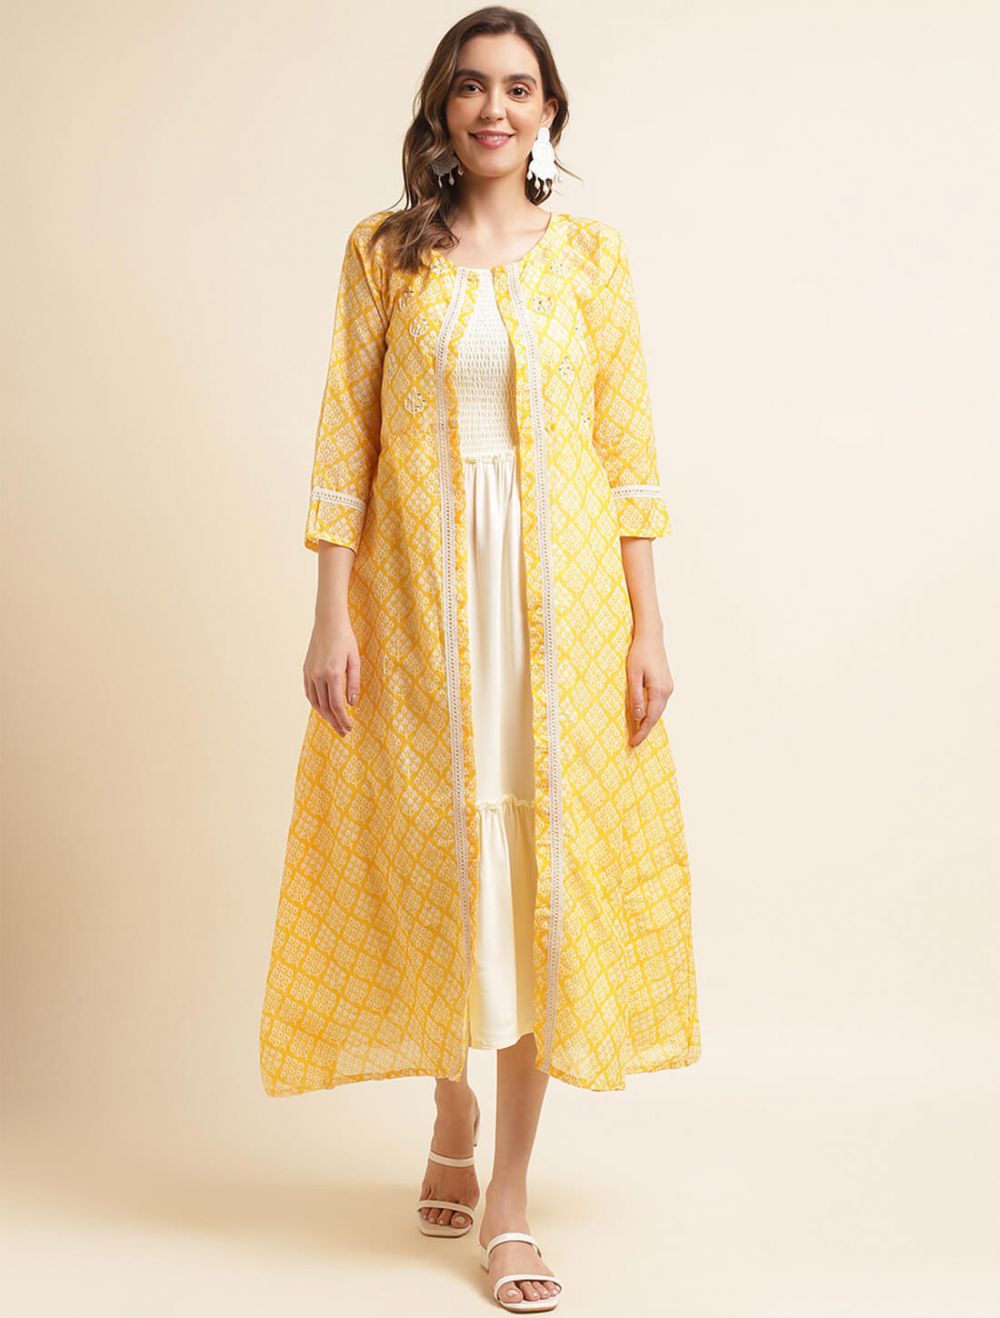 Buy long shrug dresses for women stylish in India @ Limeroad